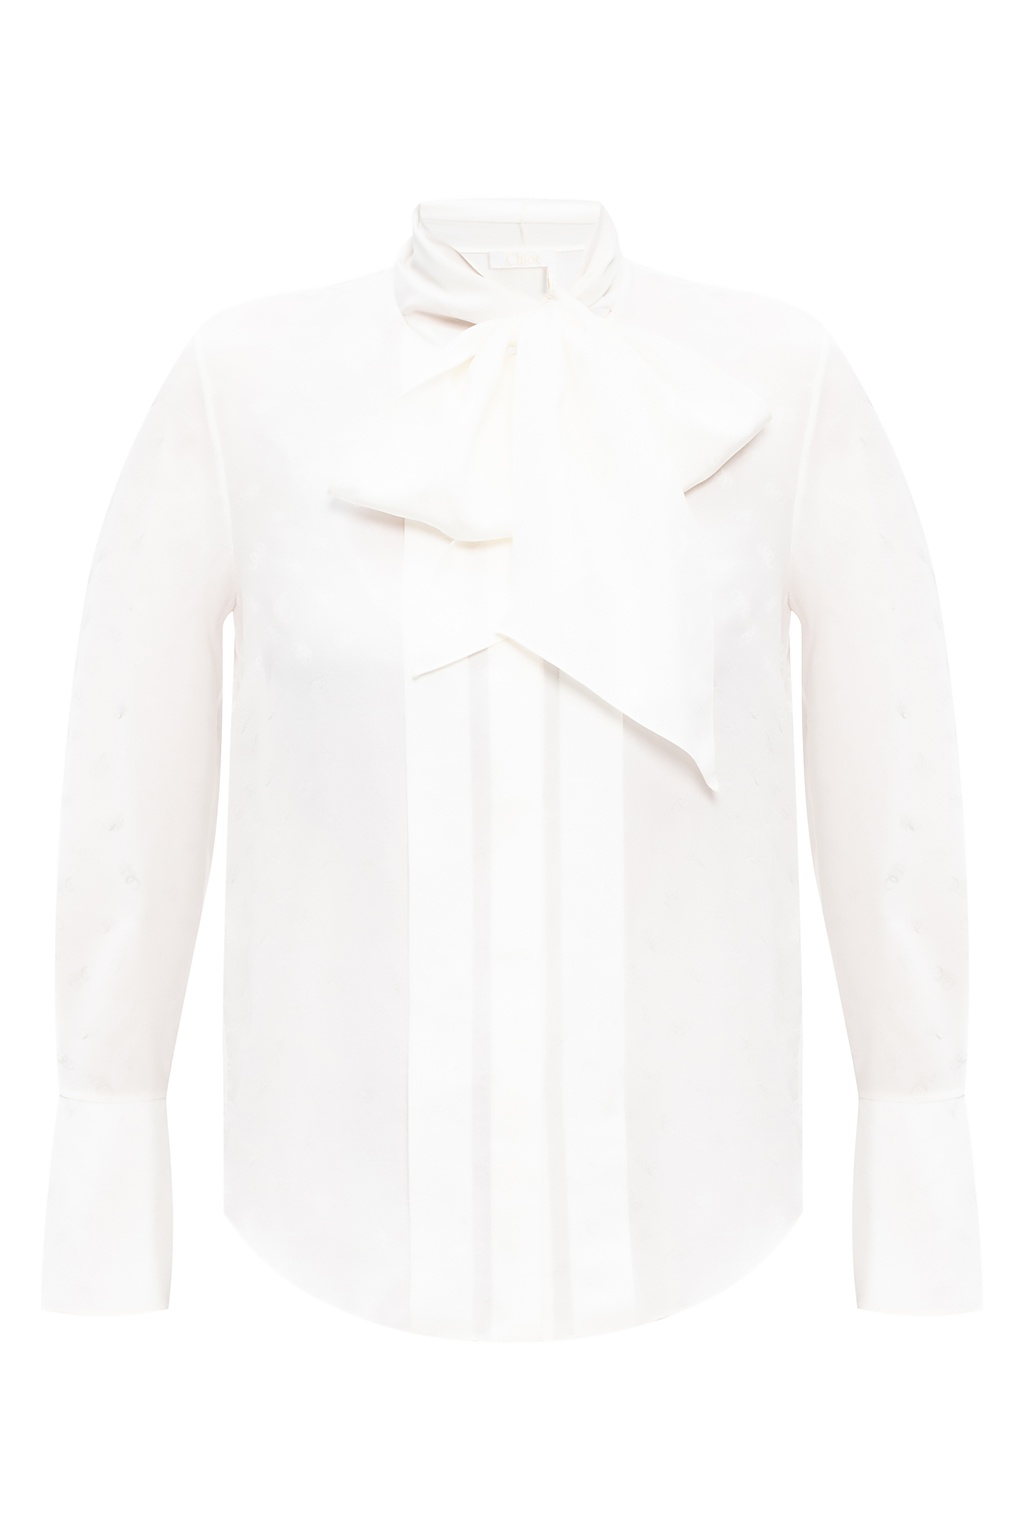 Chloé Silk shirt | Women's Clothing | IetpShops